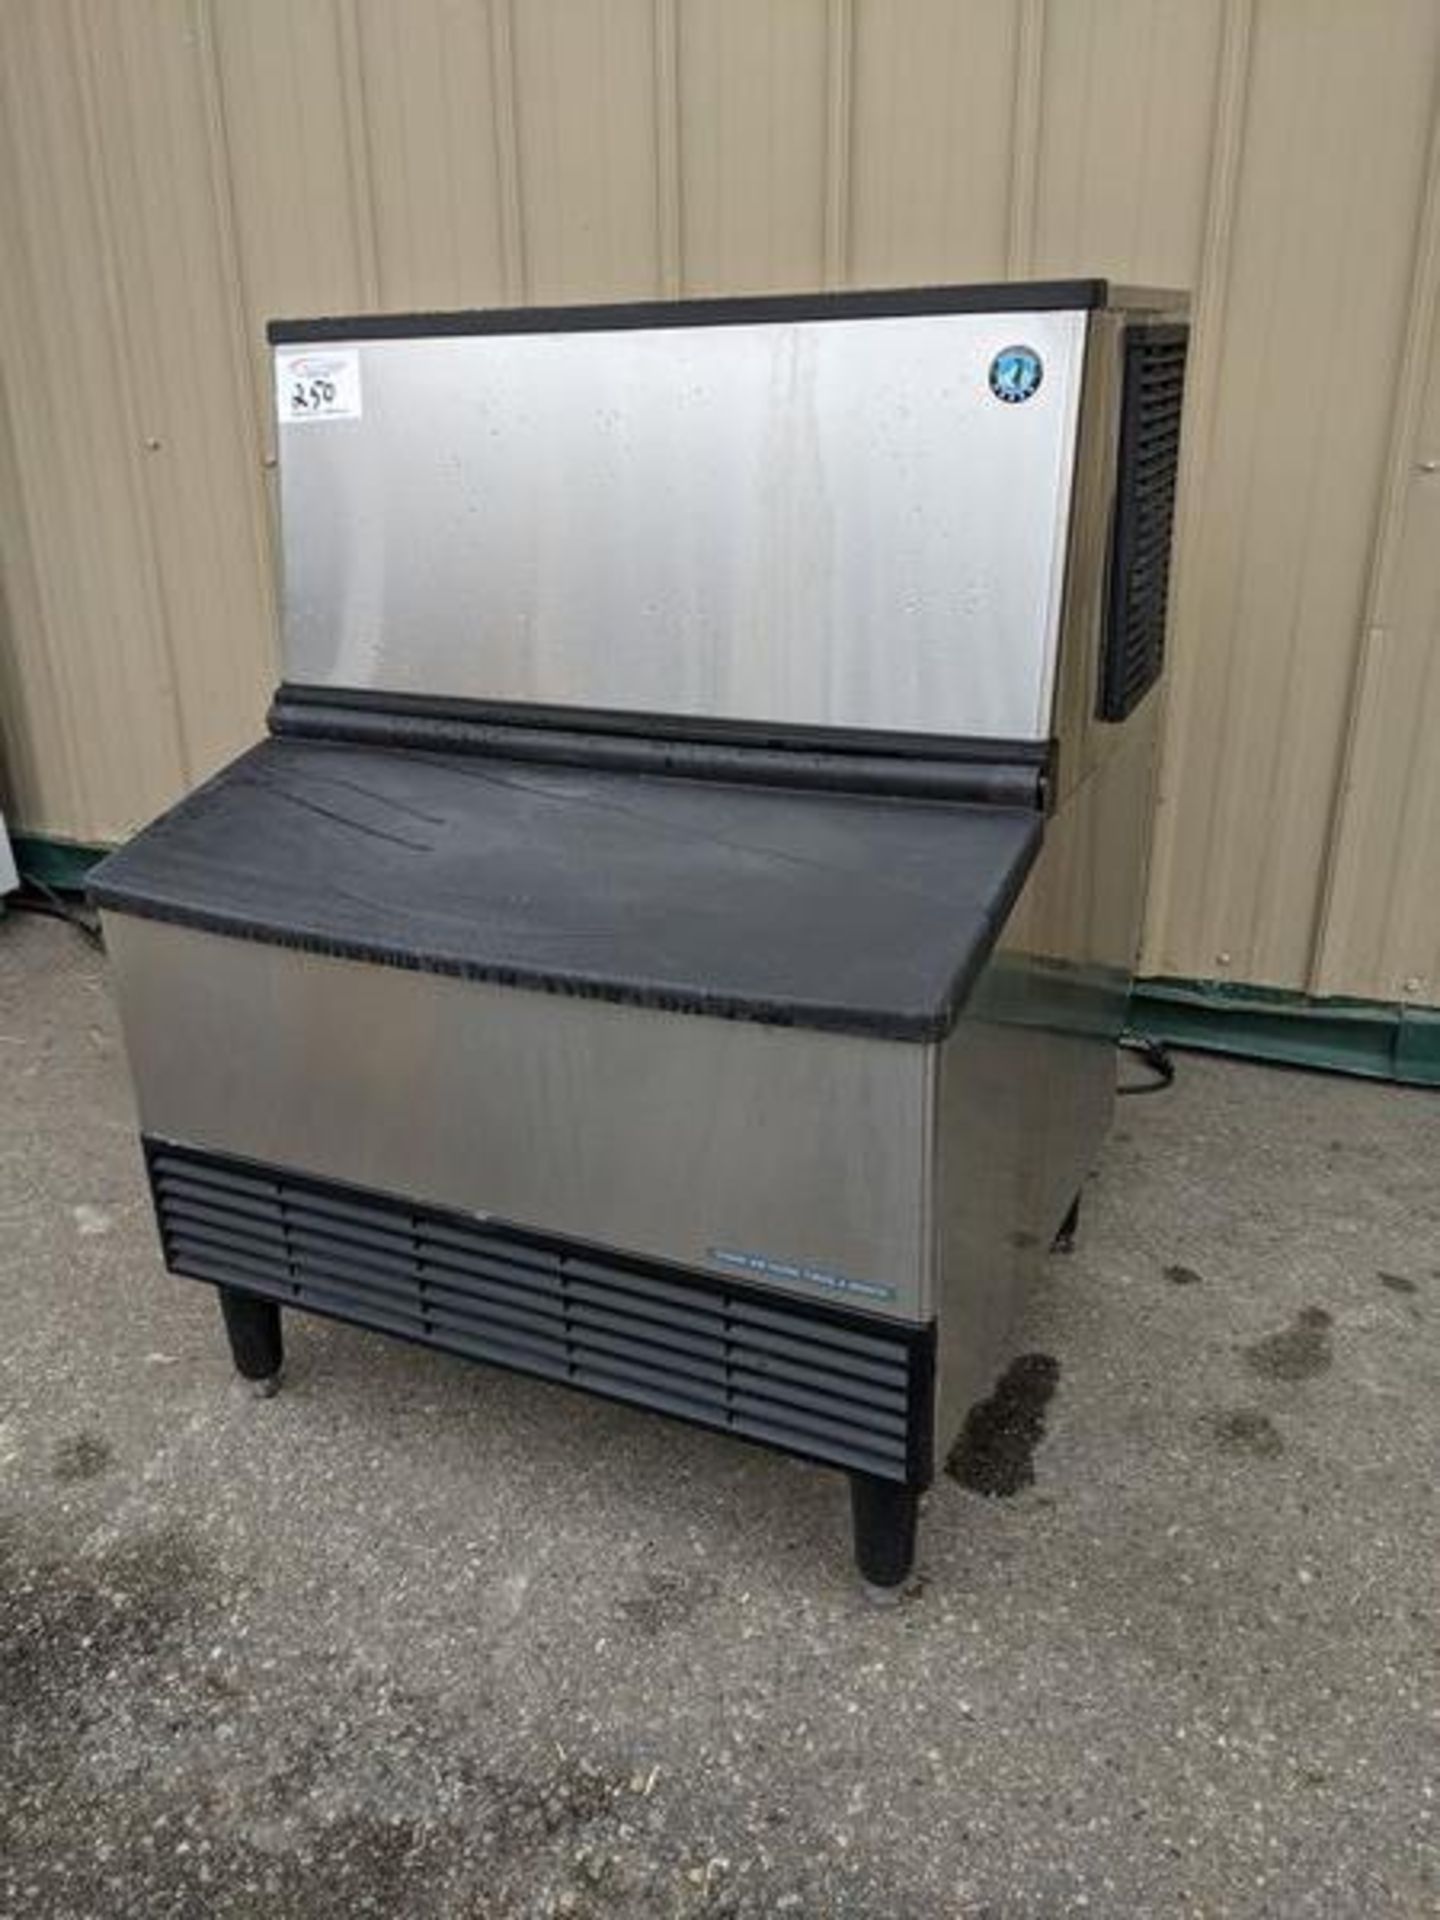 Hoshizaki Ice Machine with Bin - Installed new in 2019 - Restaurant Never Opened